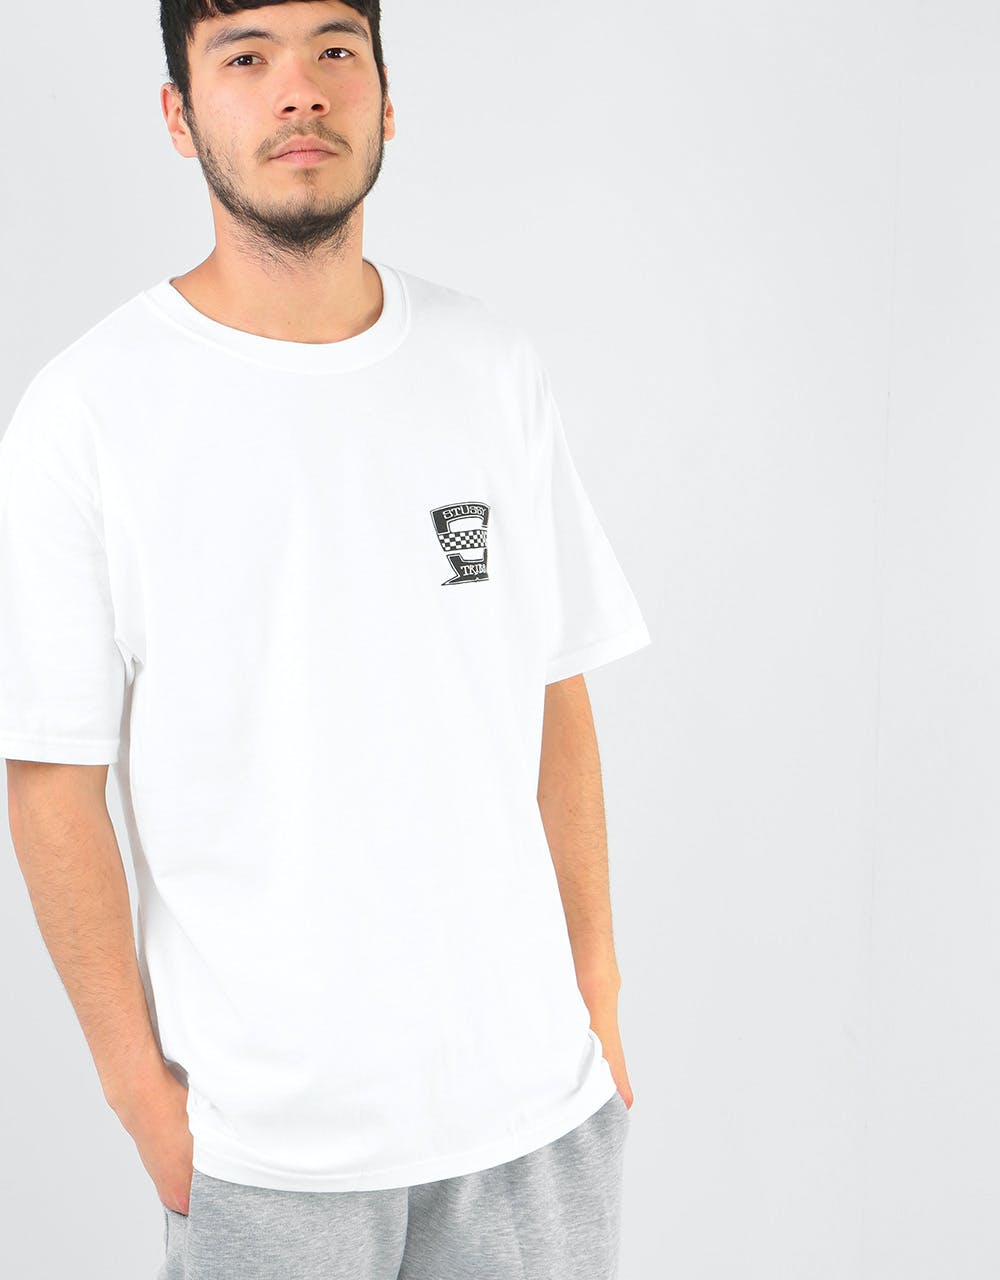 Stüssy Checkers T-Shirt - White